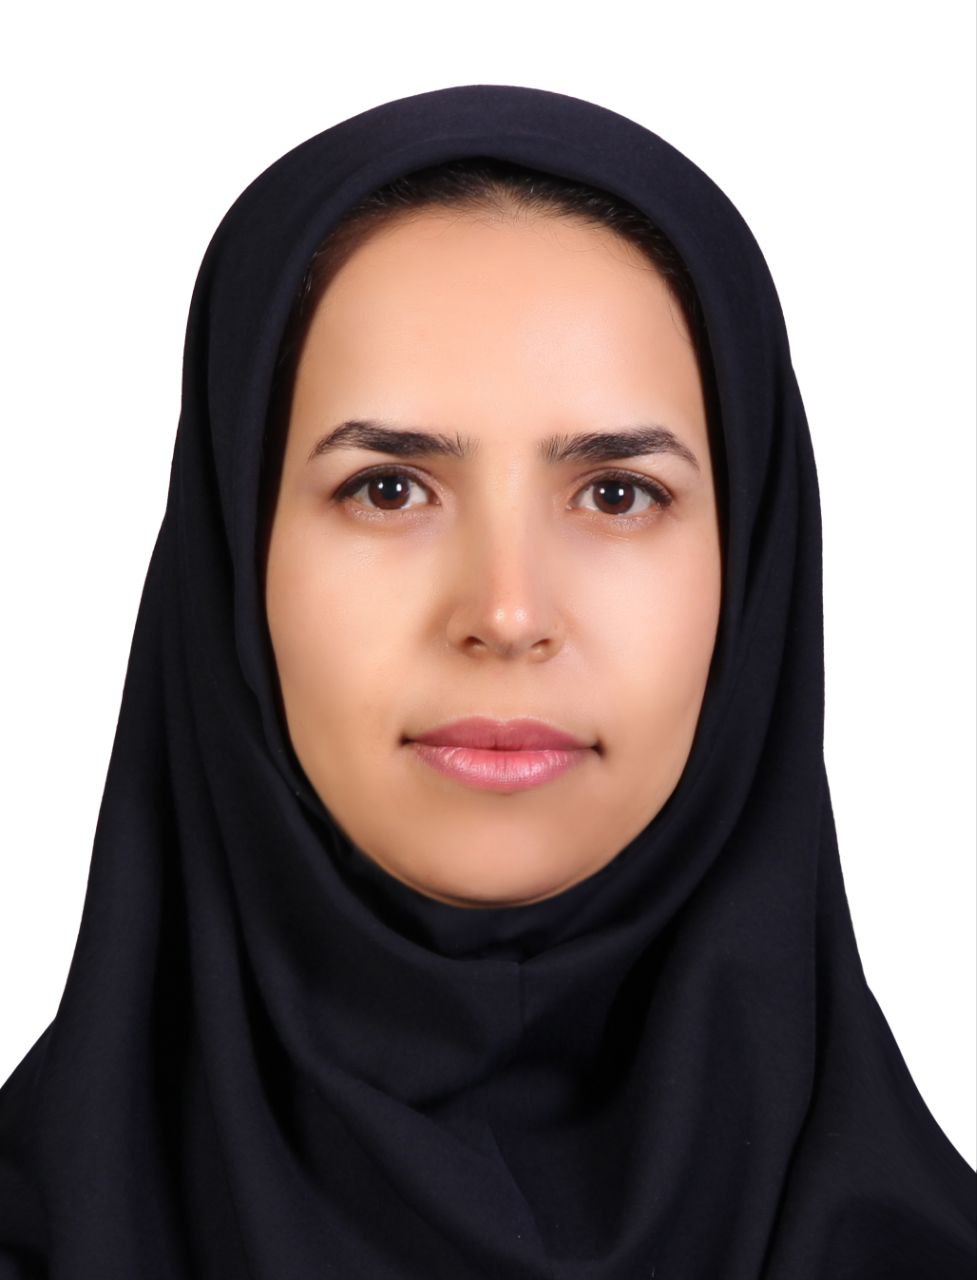 Dr. Sahar Mohammadzadeh